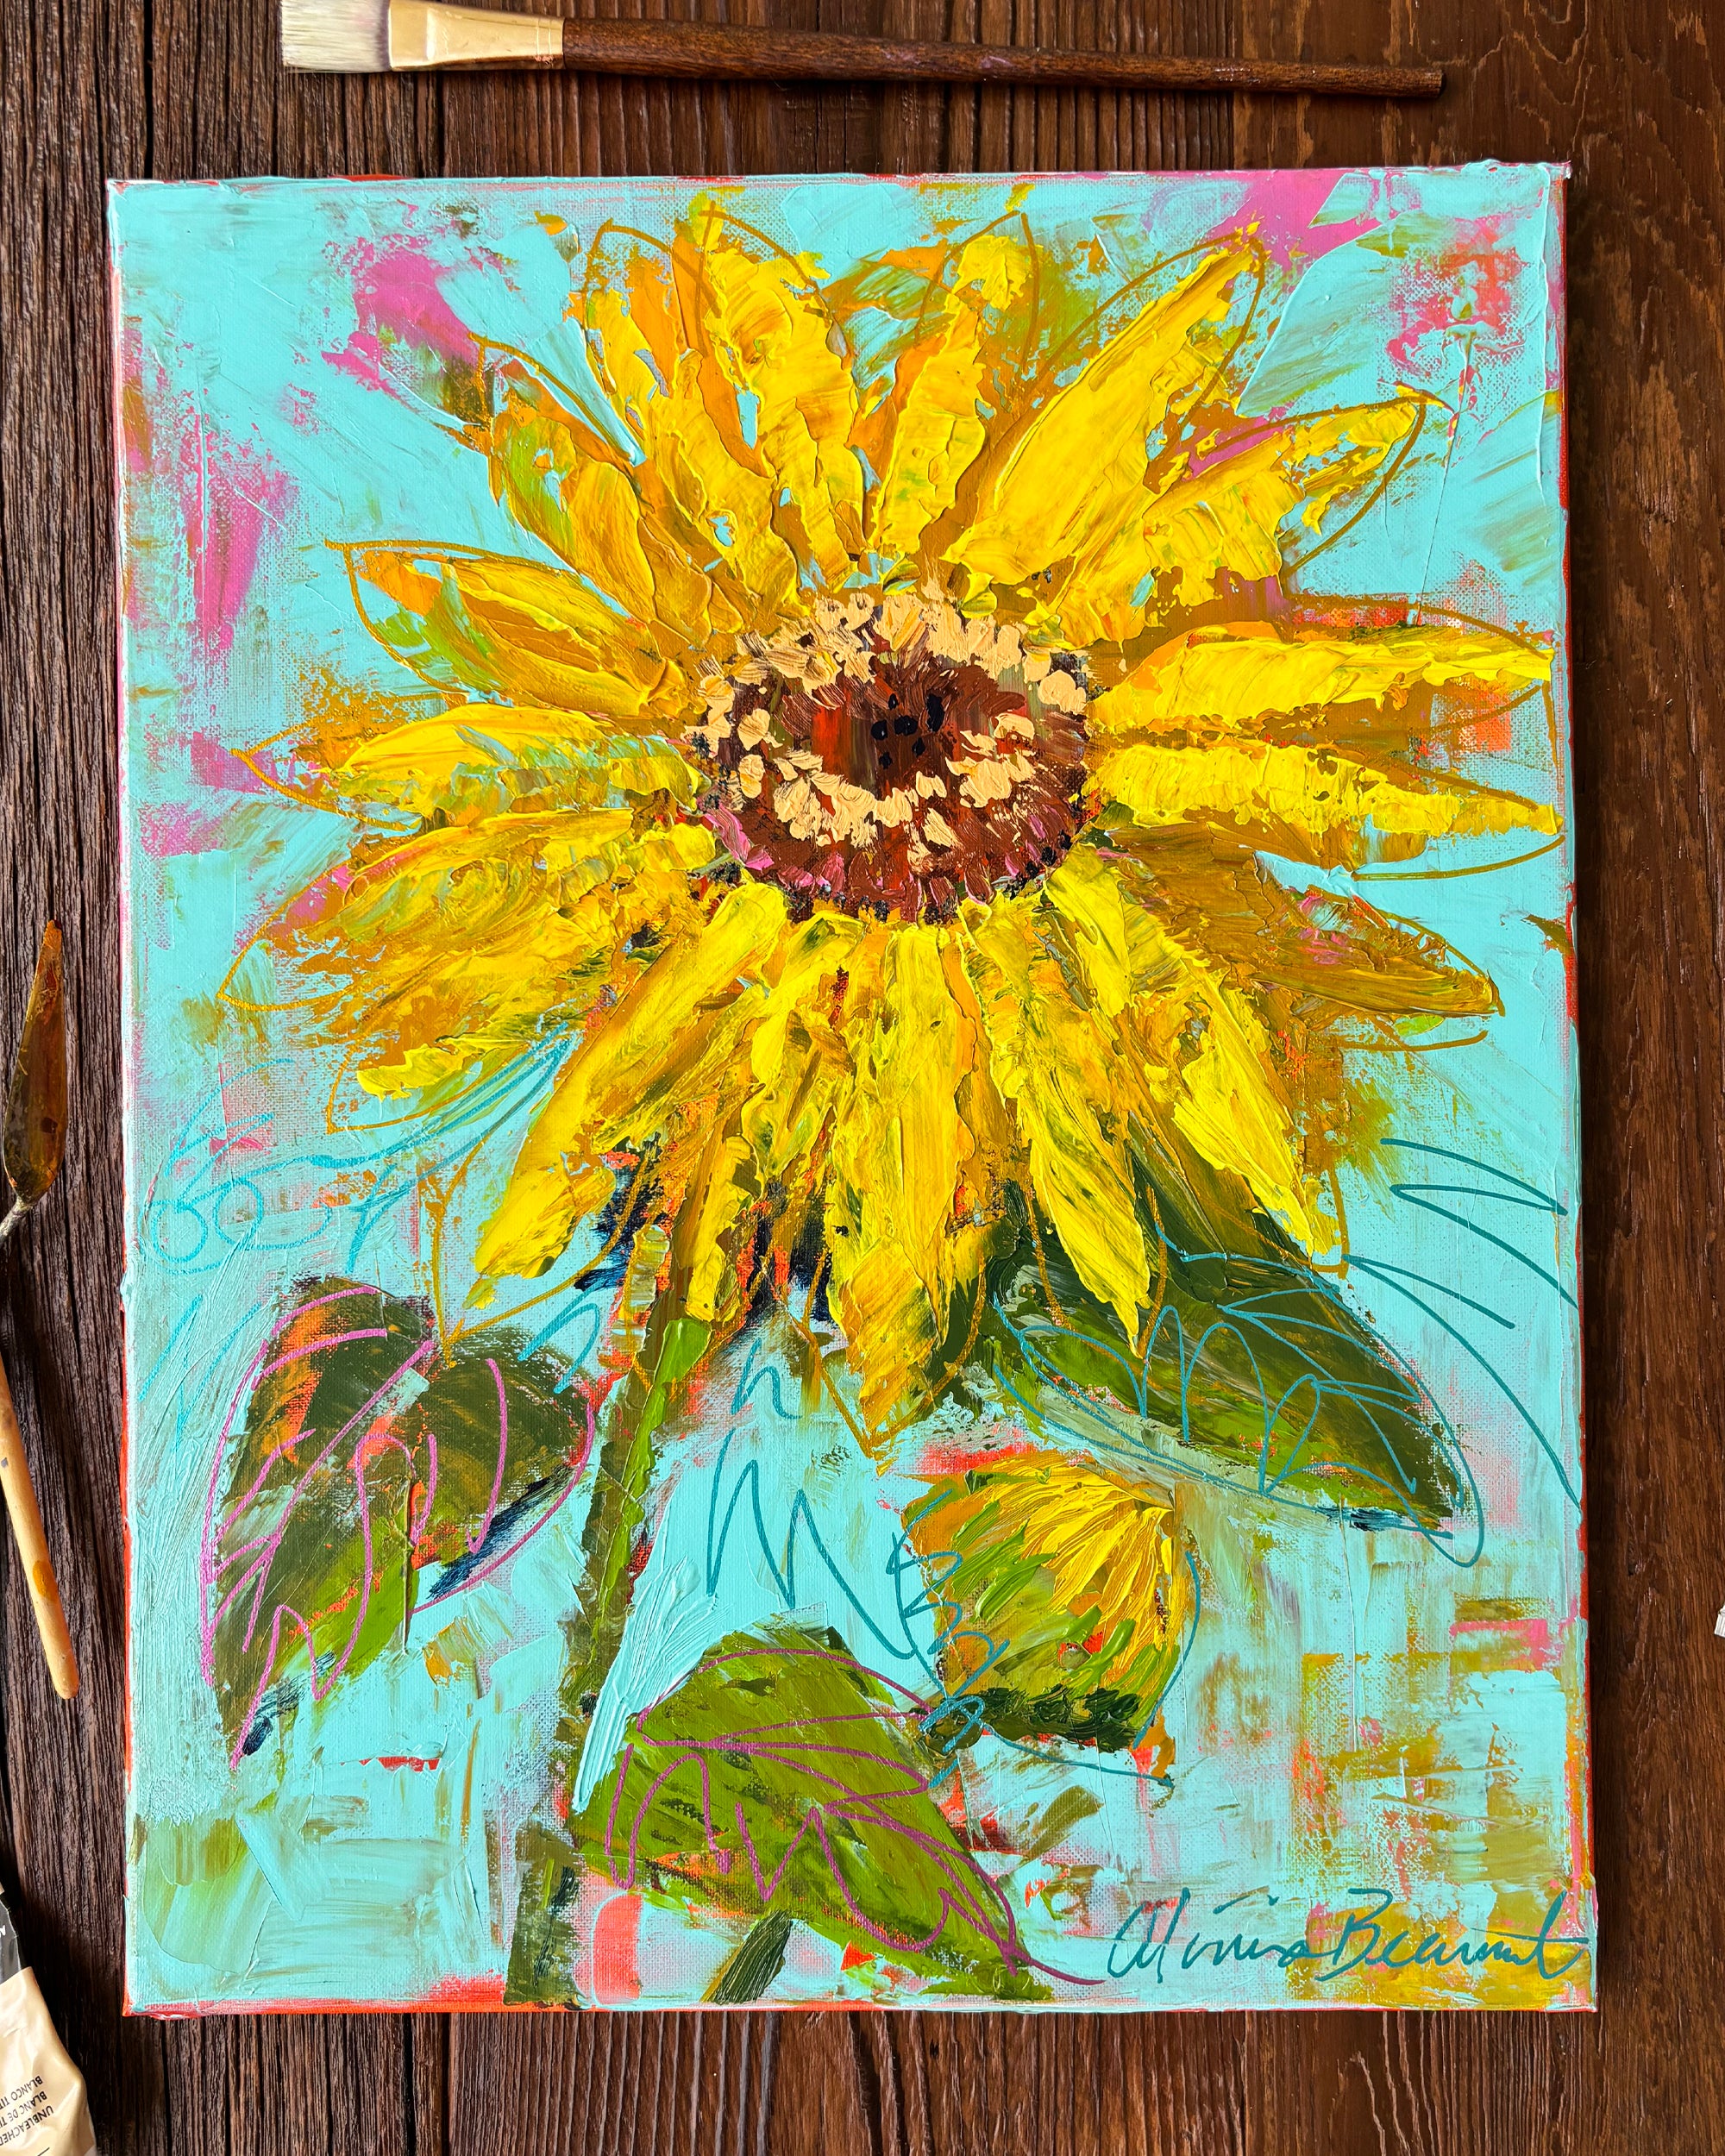 Sunflower IV - original acrylic painting